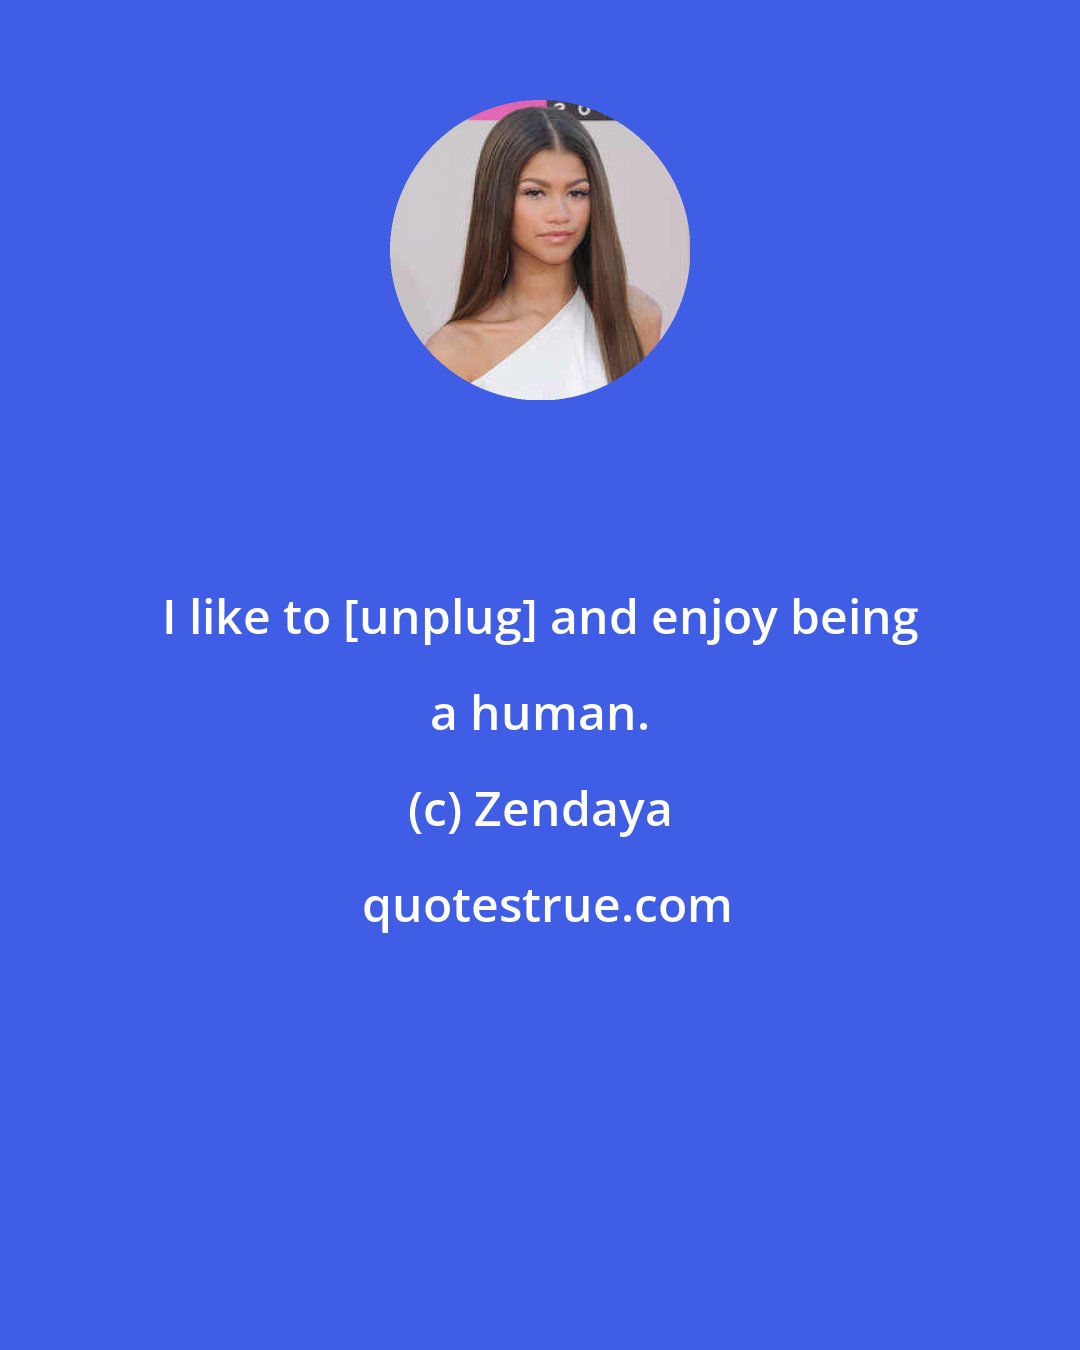 Zendaya: I like to [unplug] and enjoy being a human.